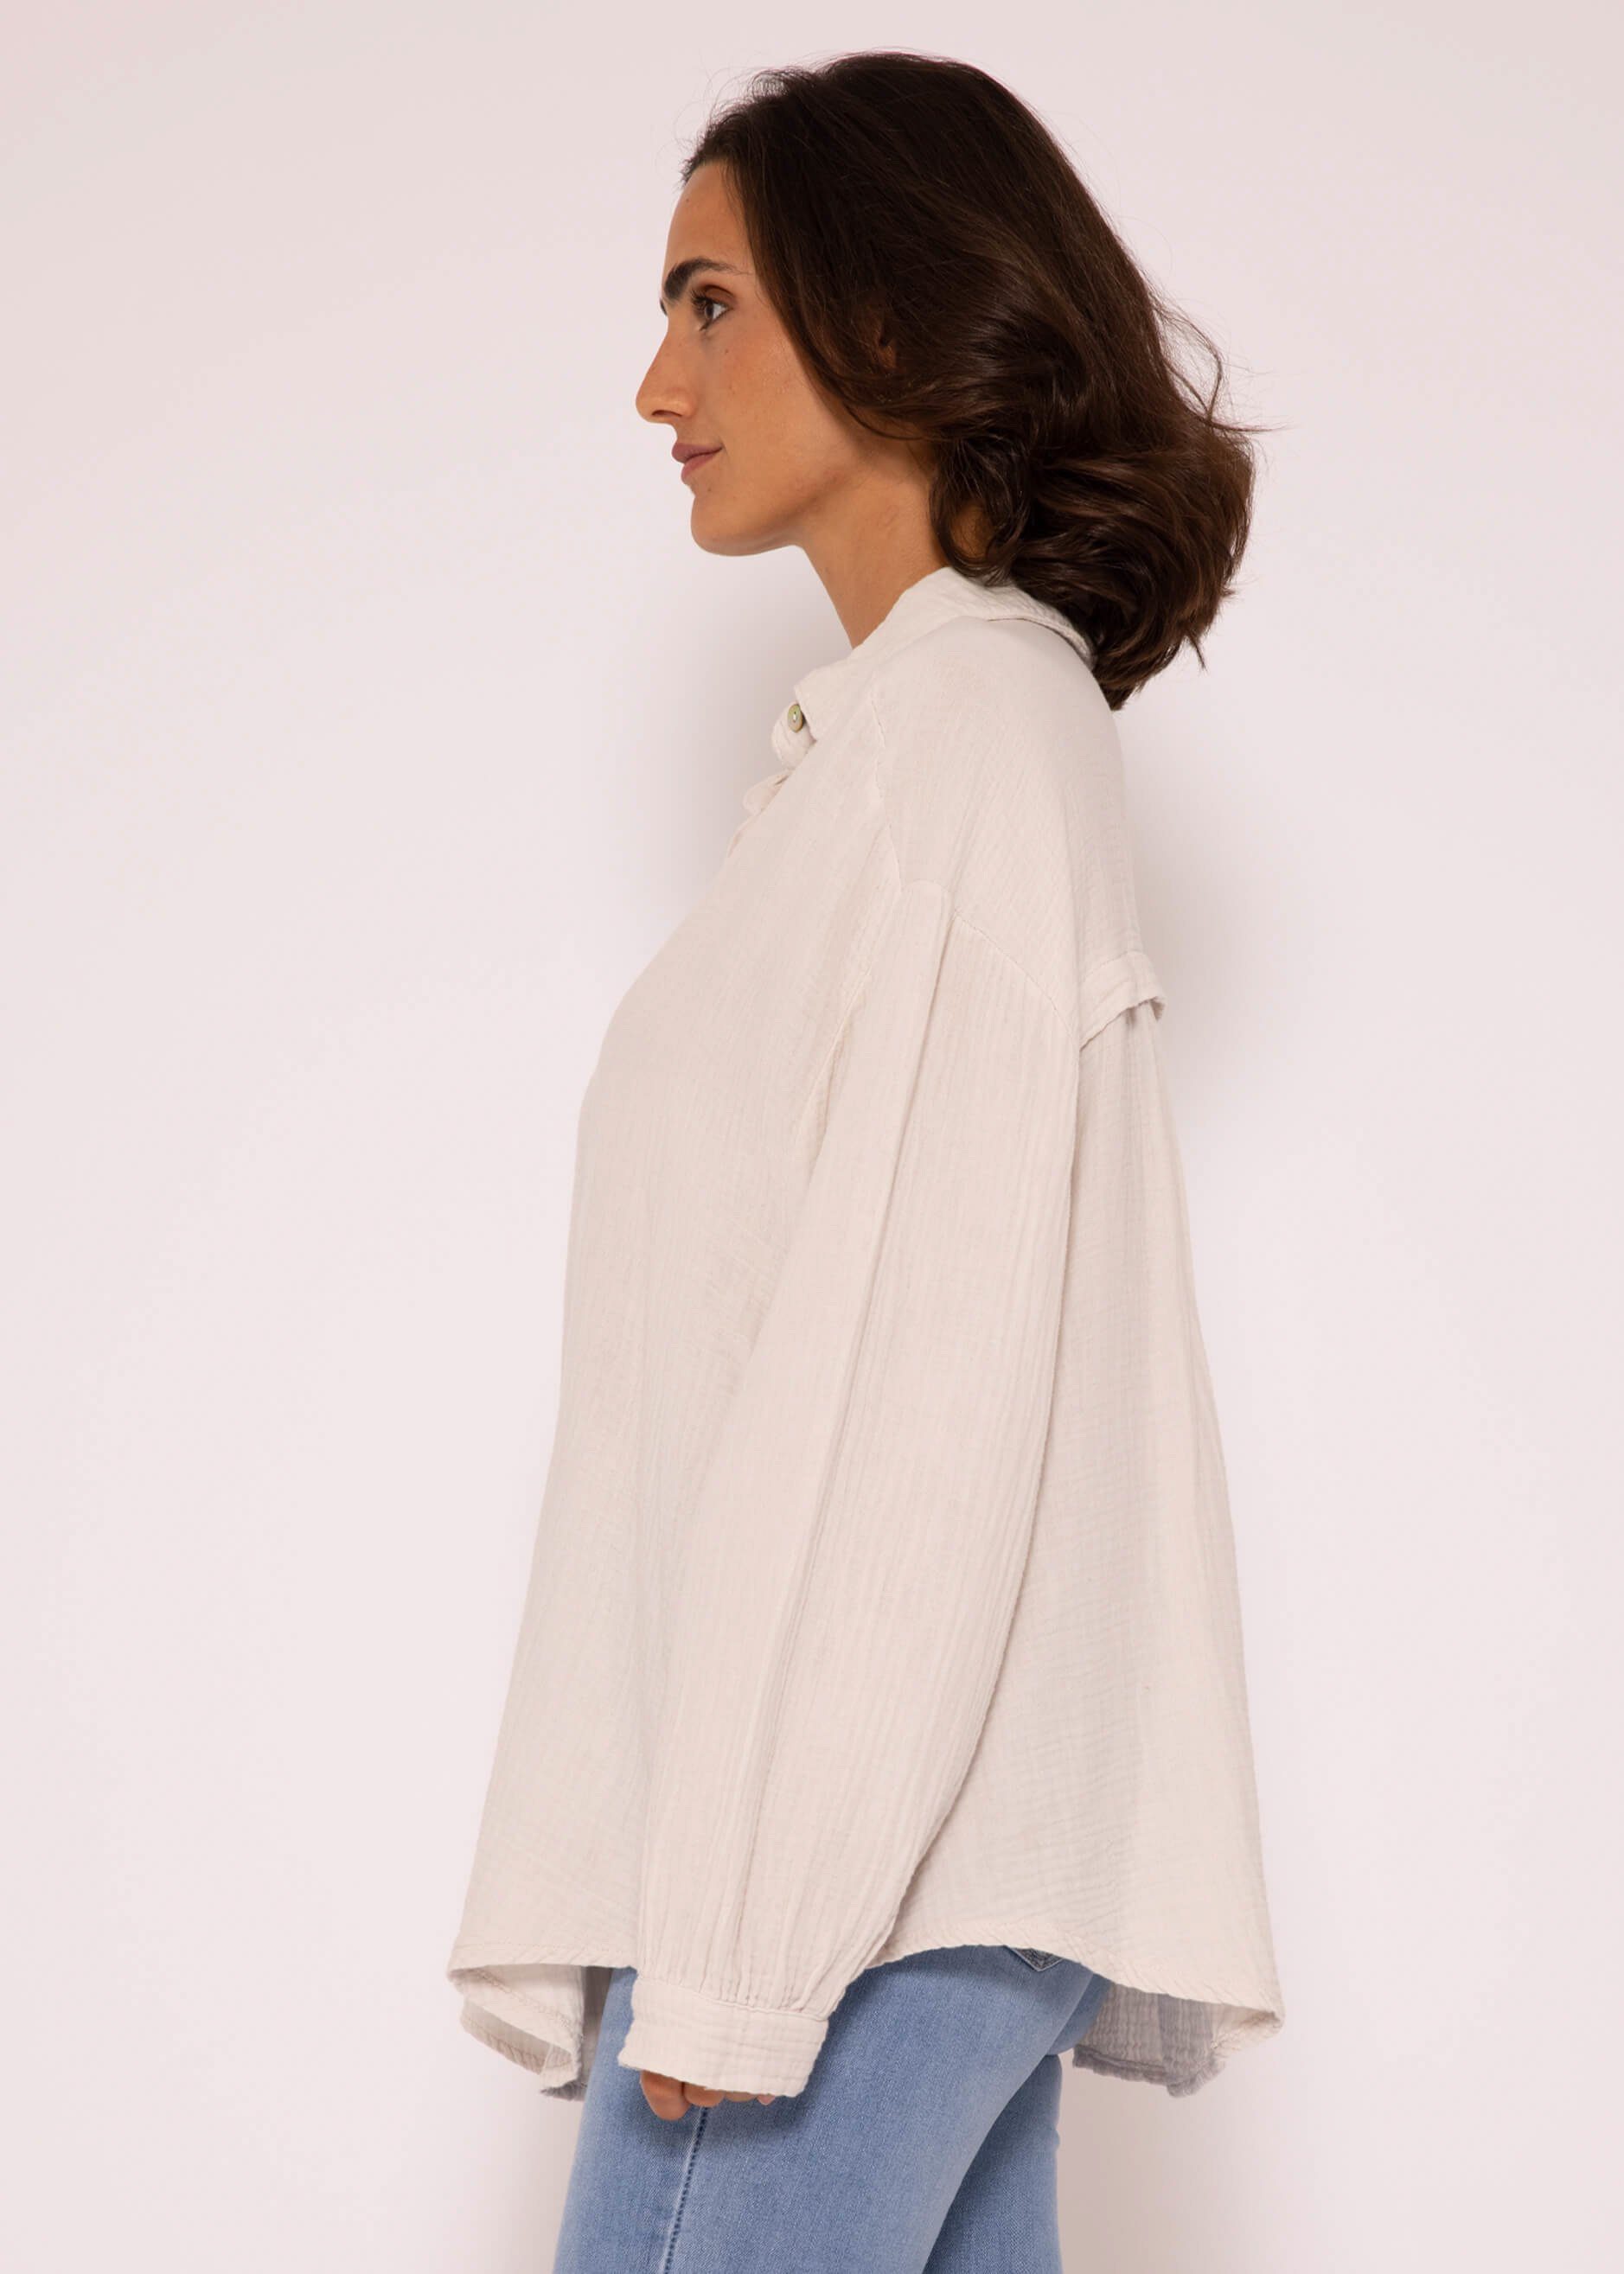 SASSYCLASSY Longbluse (Gr. Oversize Hemdbluse Size Hellbeige Damen lang Langarm V-Ausschnitt, aus mit Musselin 36-48) One Baumwolle Bluse